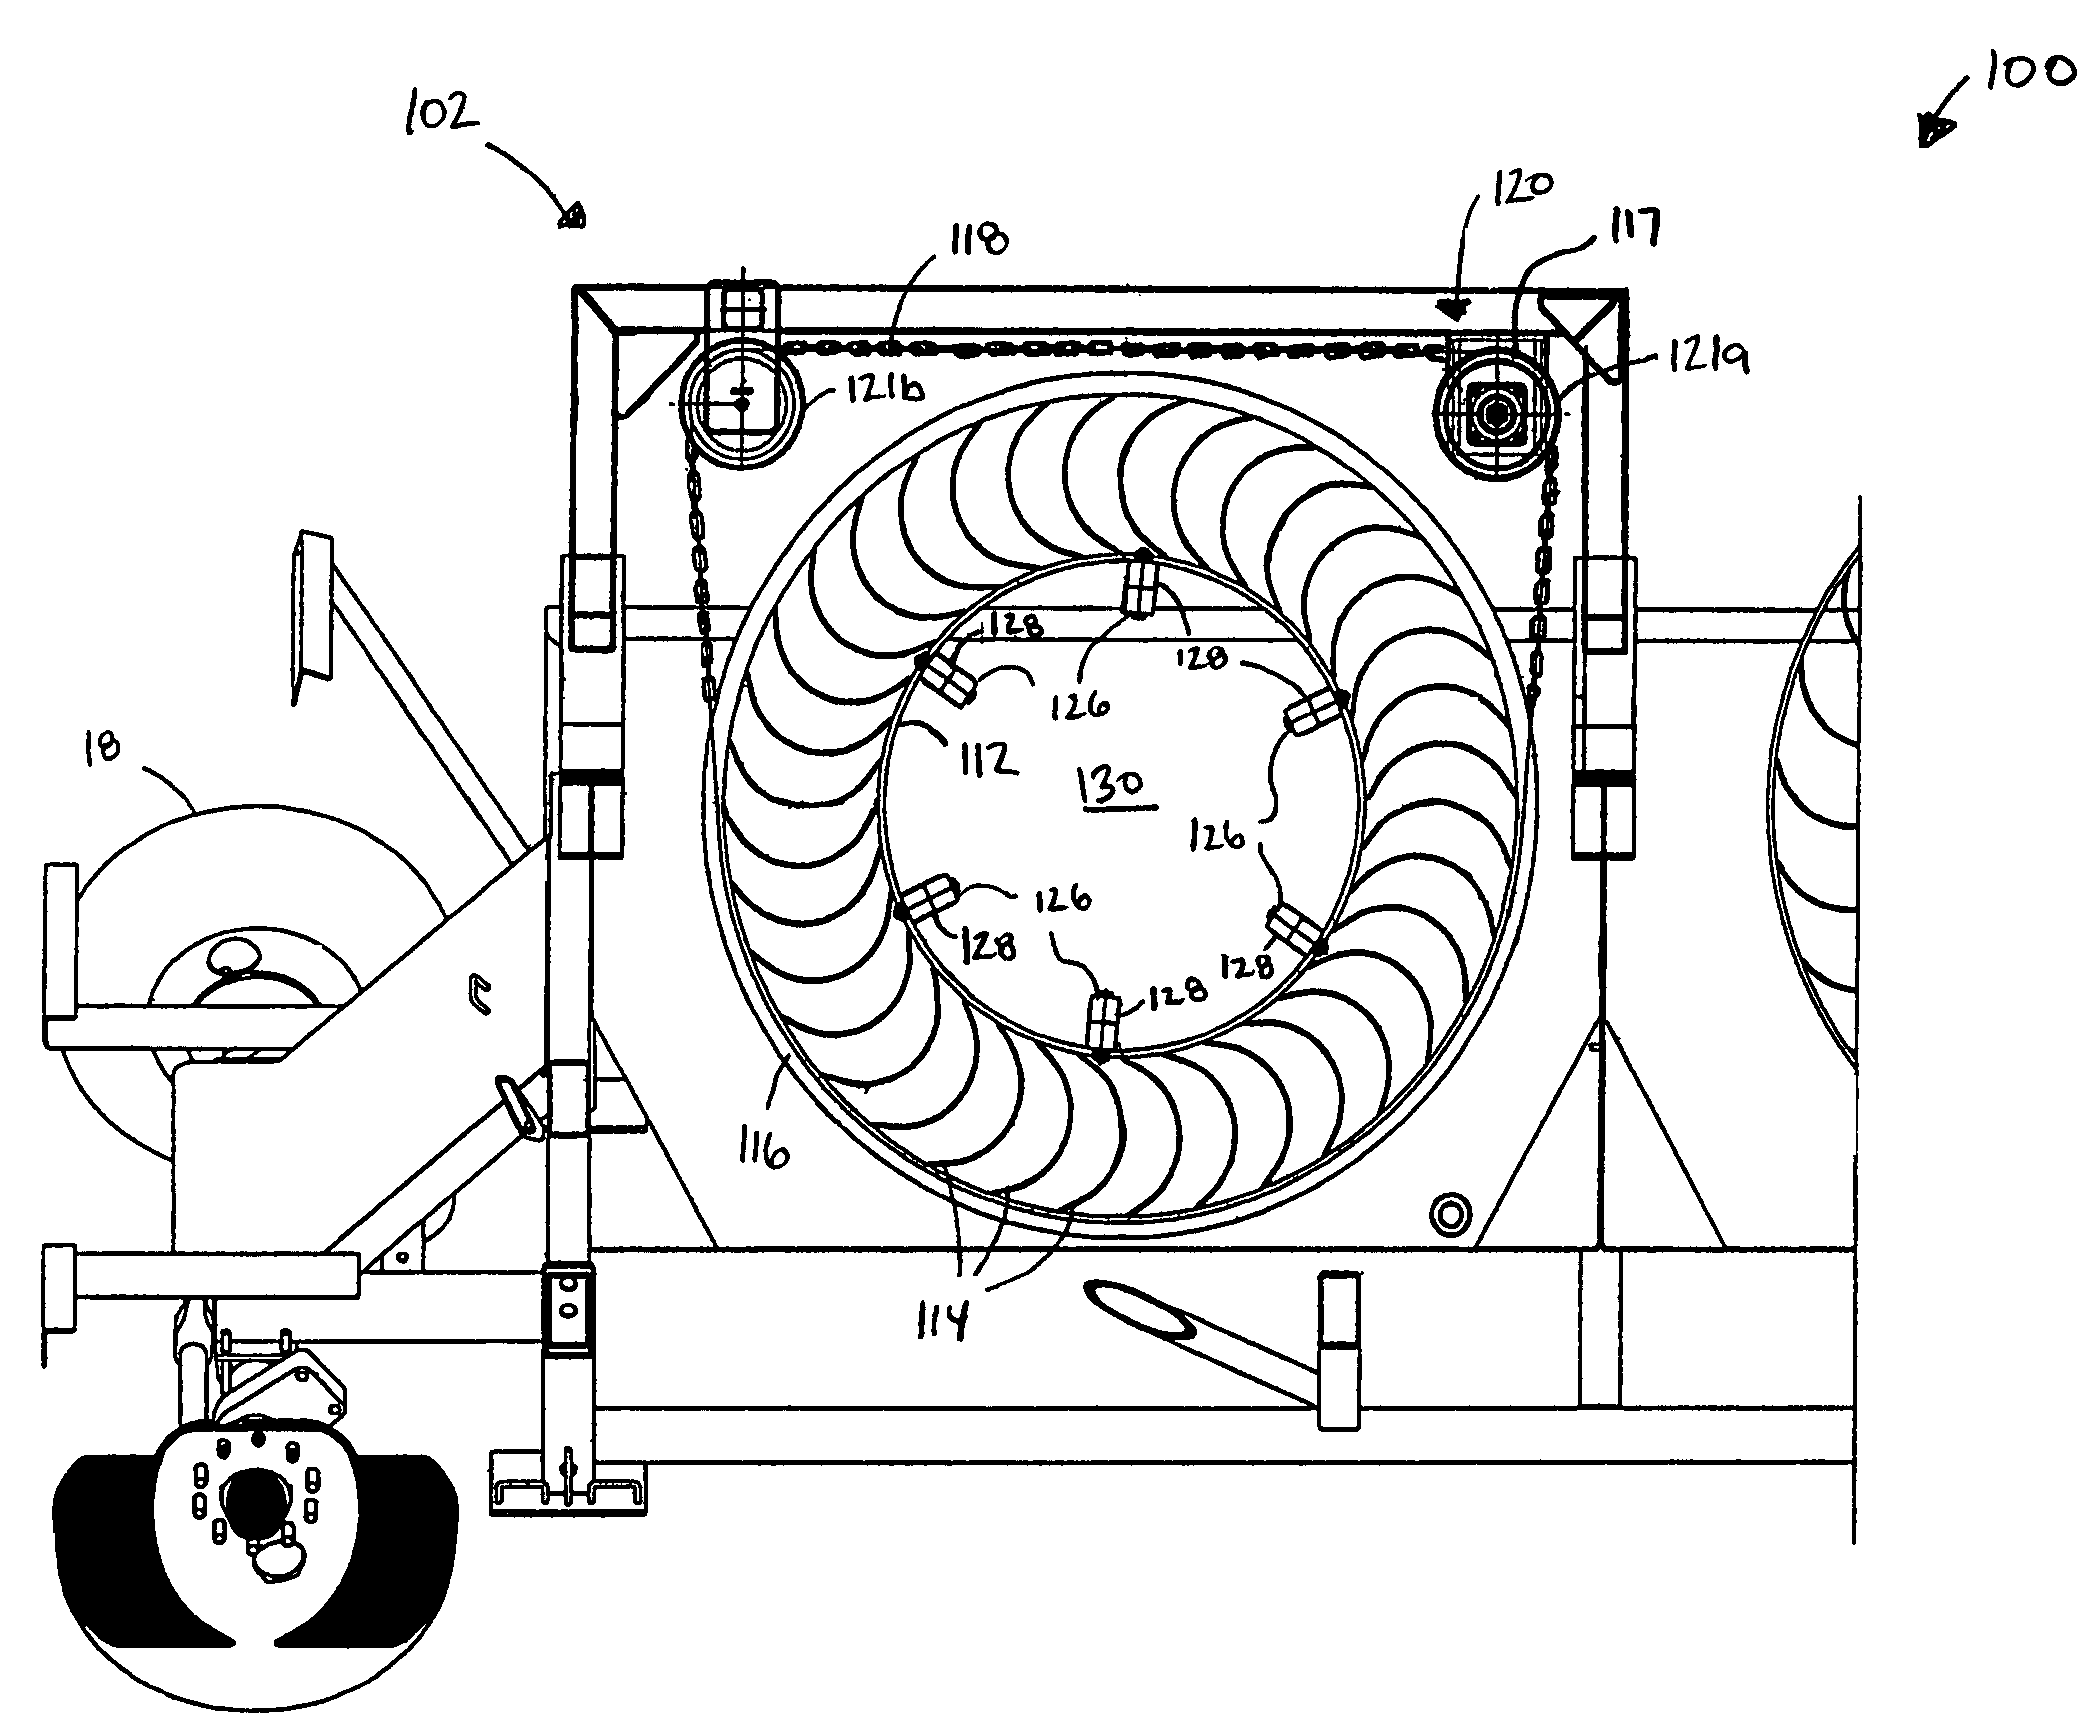 Material classifier having a scoop wheel